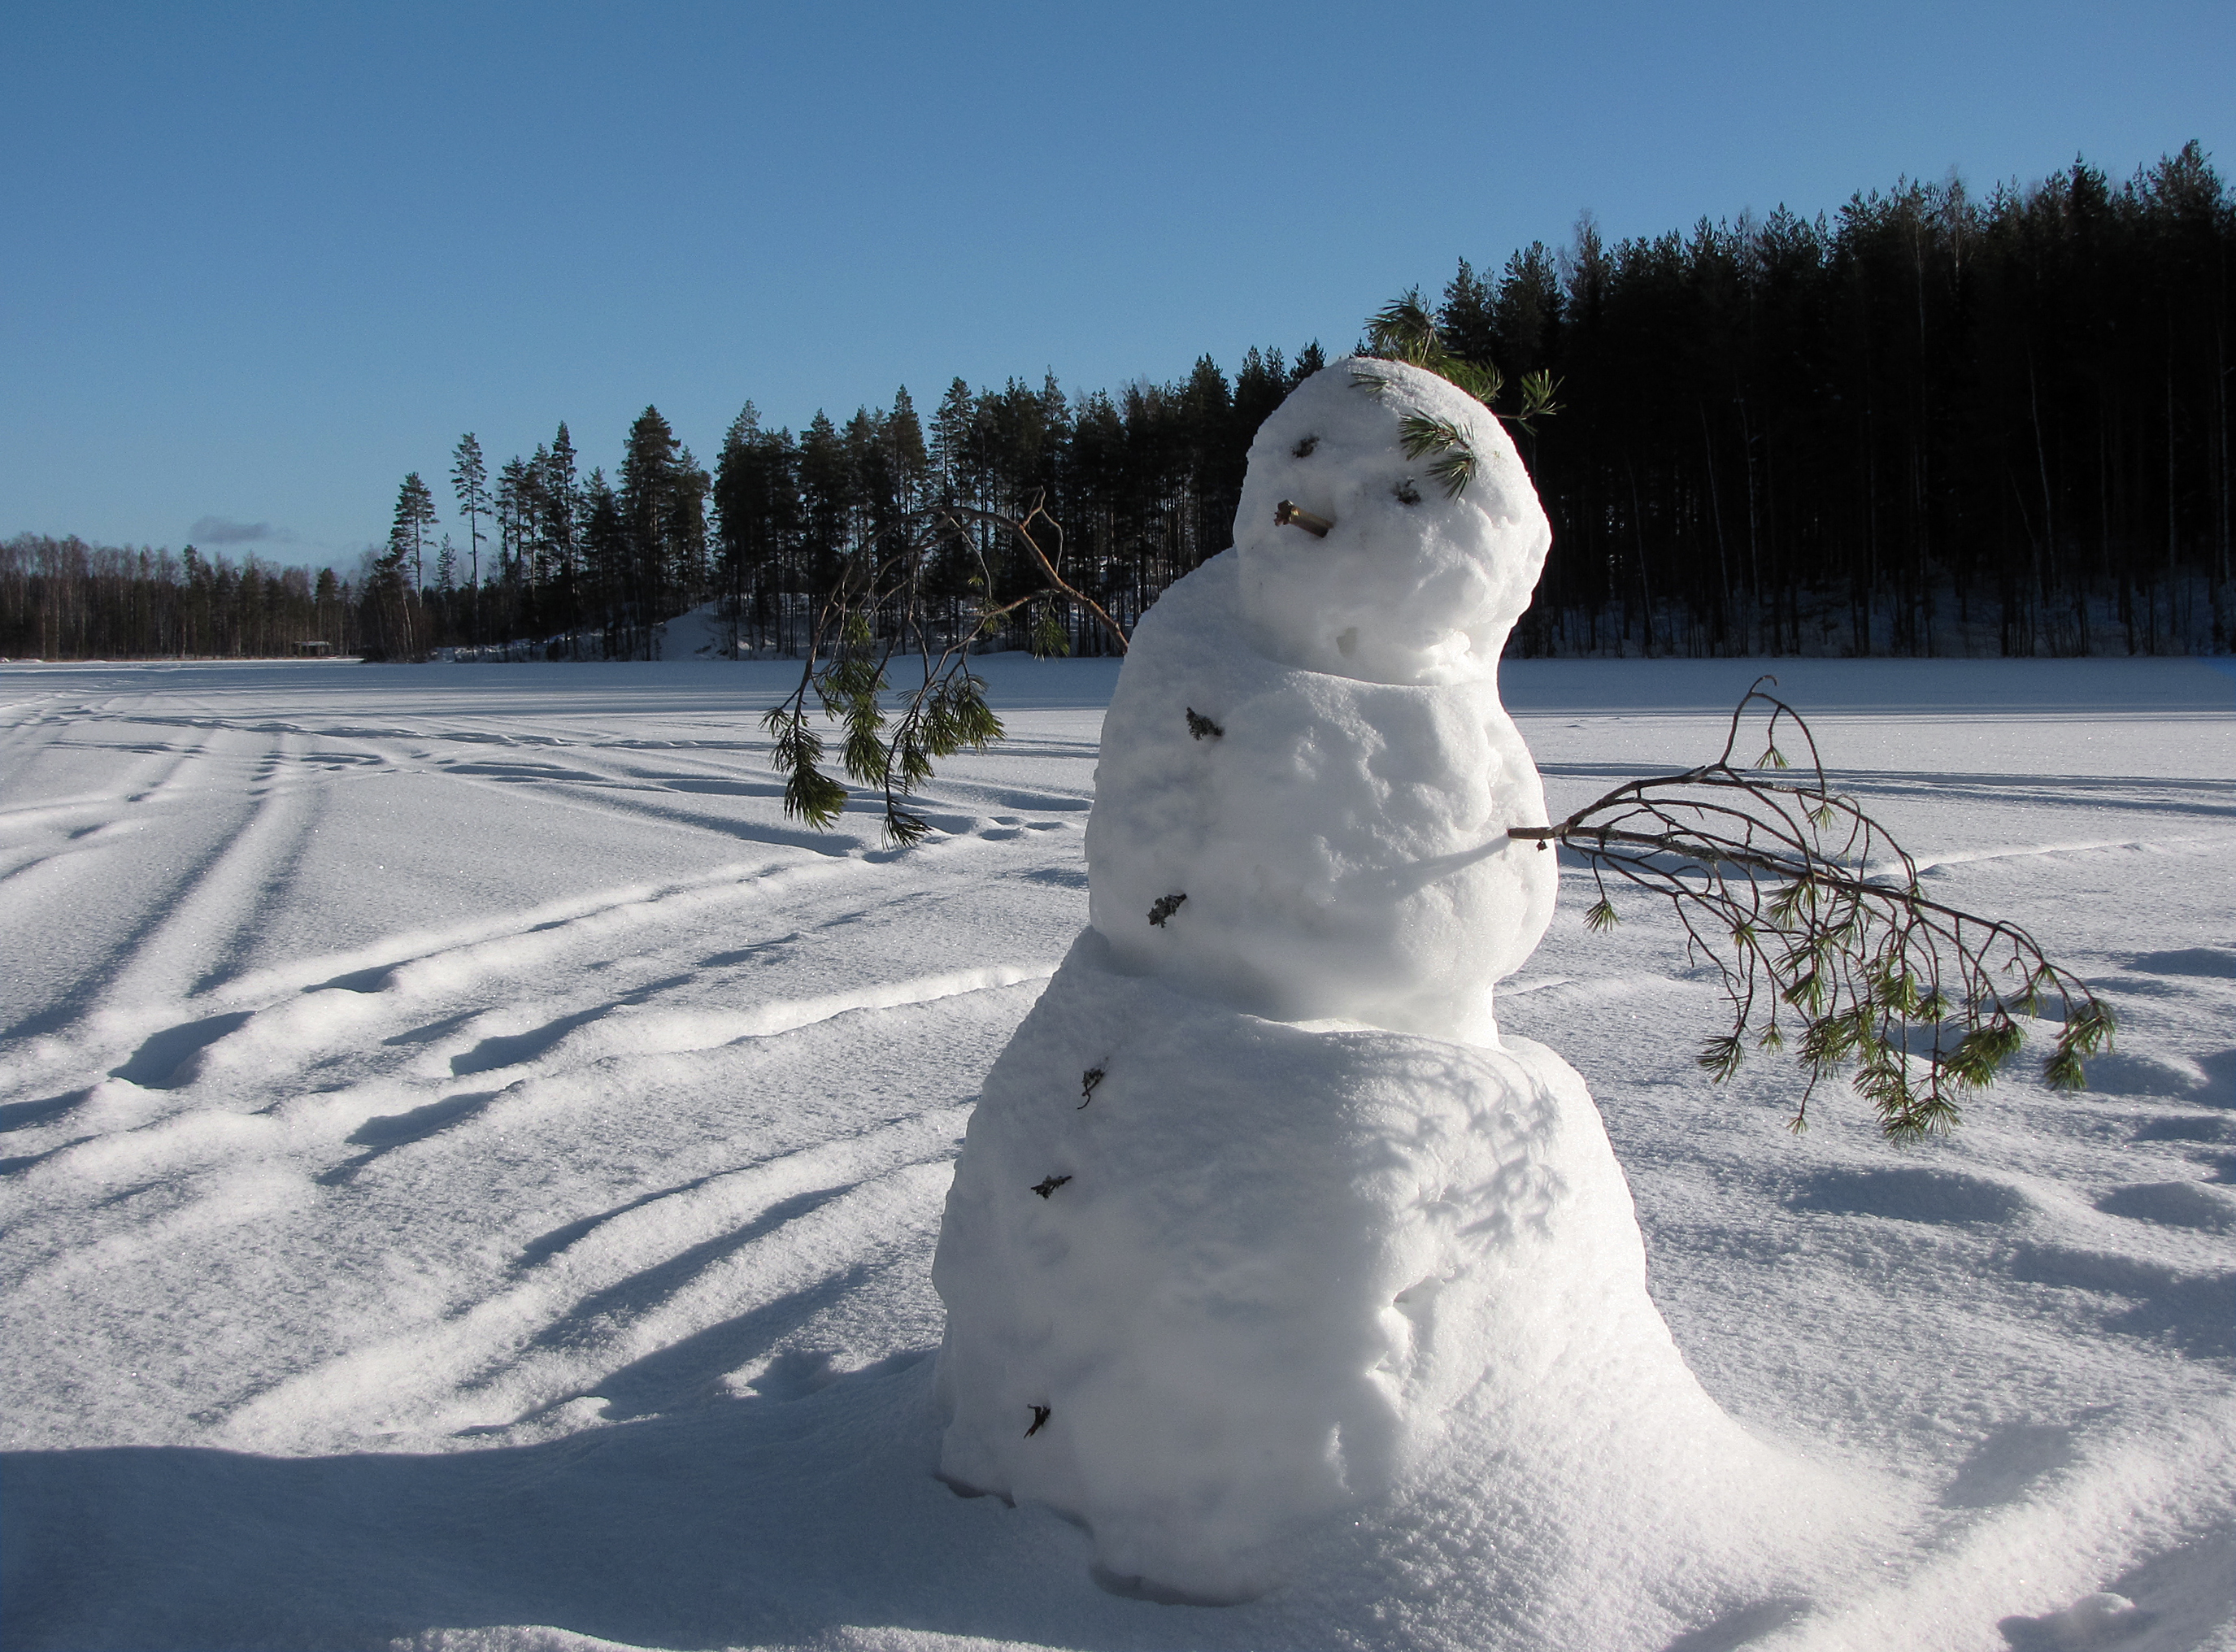 http://flashfriday.files.wordpress.com/2013/12/snowman_on_frozen_lake.jpg